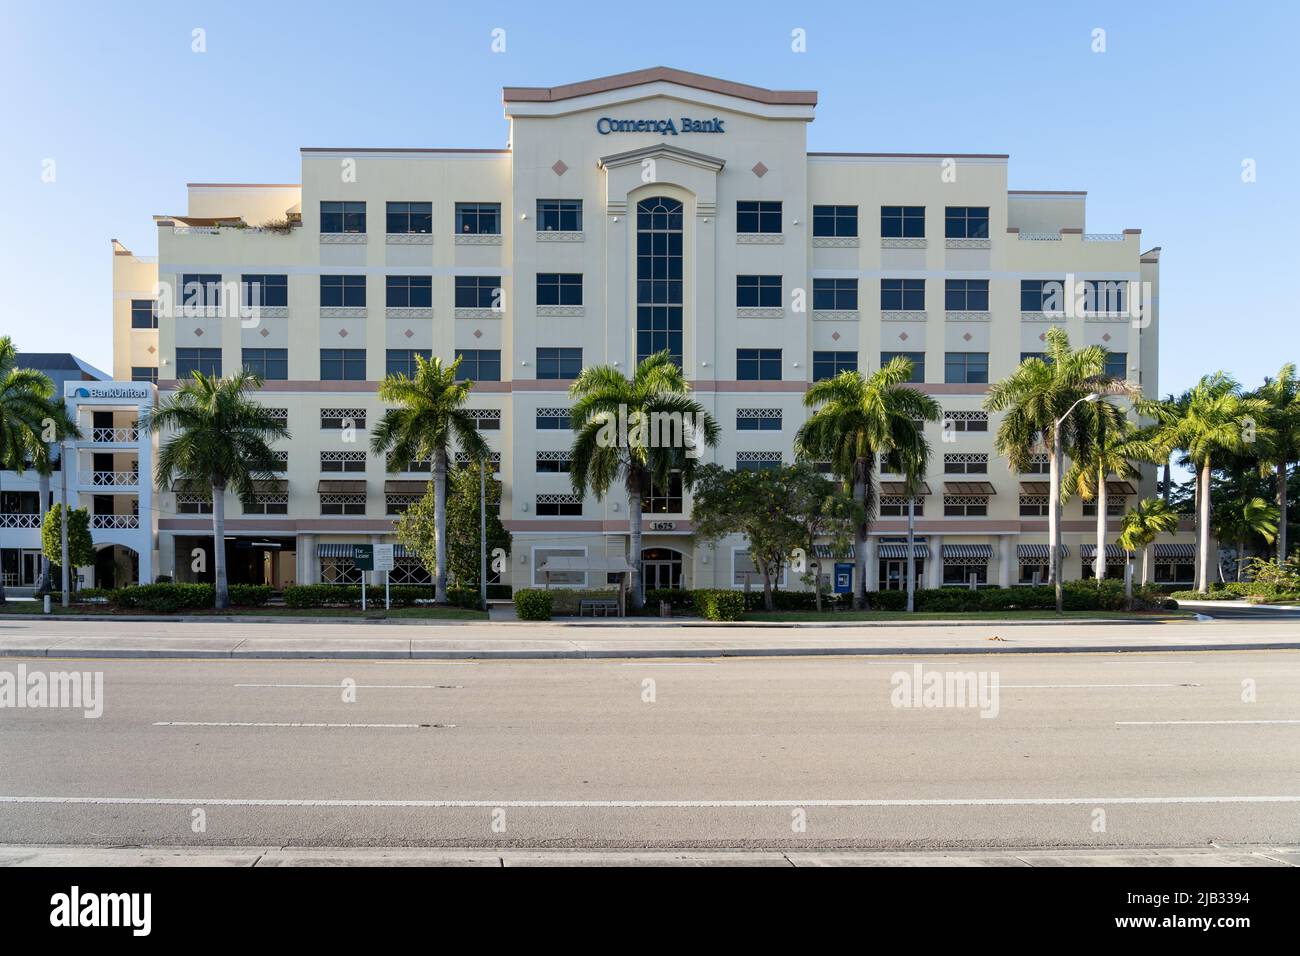 Boca Raton, FL, USA - January 2, 2022: Comerica Bank office building in Boca Raton, FL, USA. Stock Photo